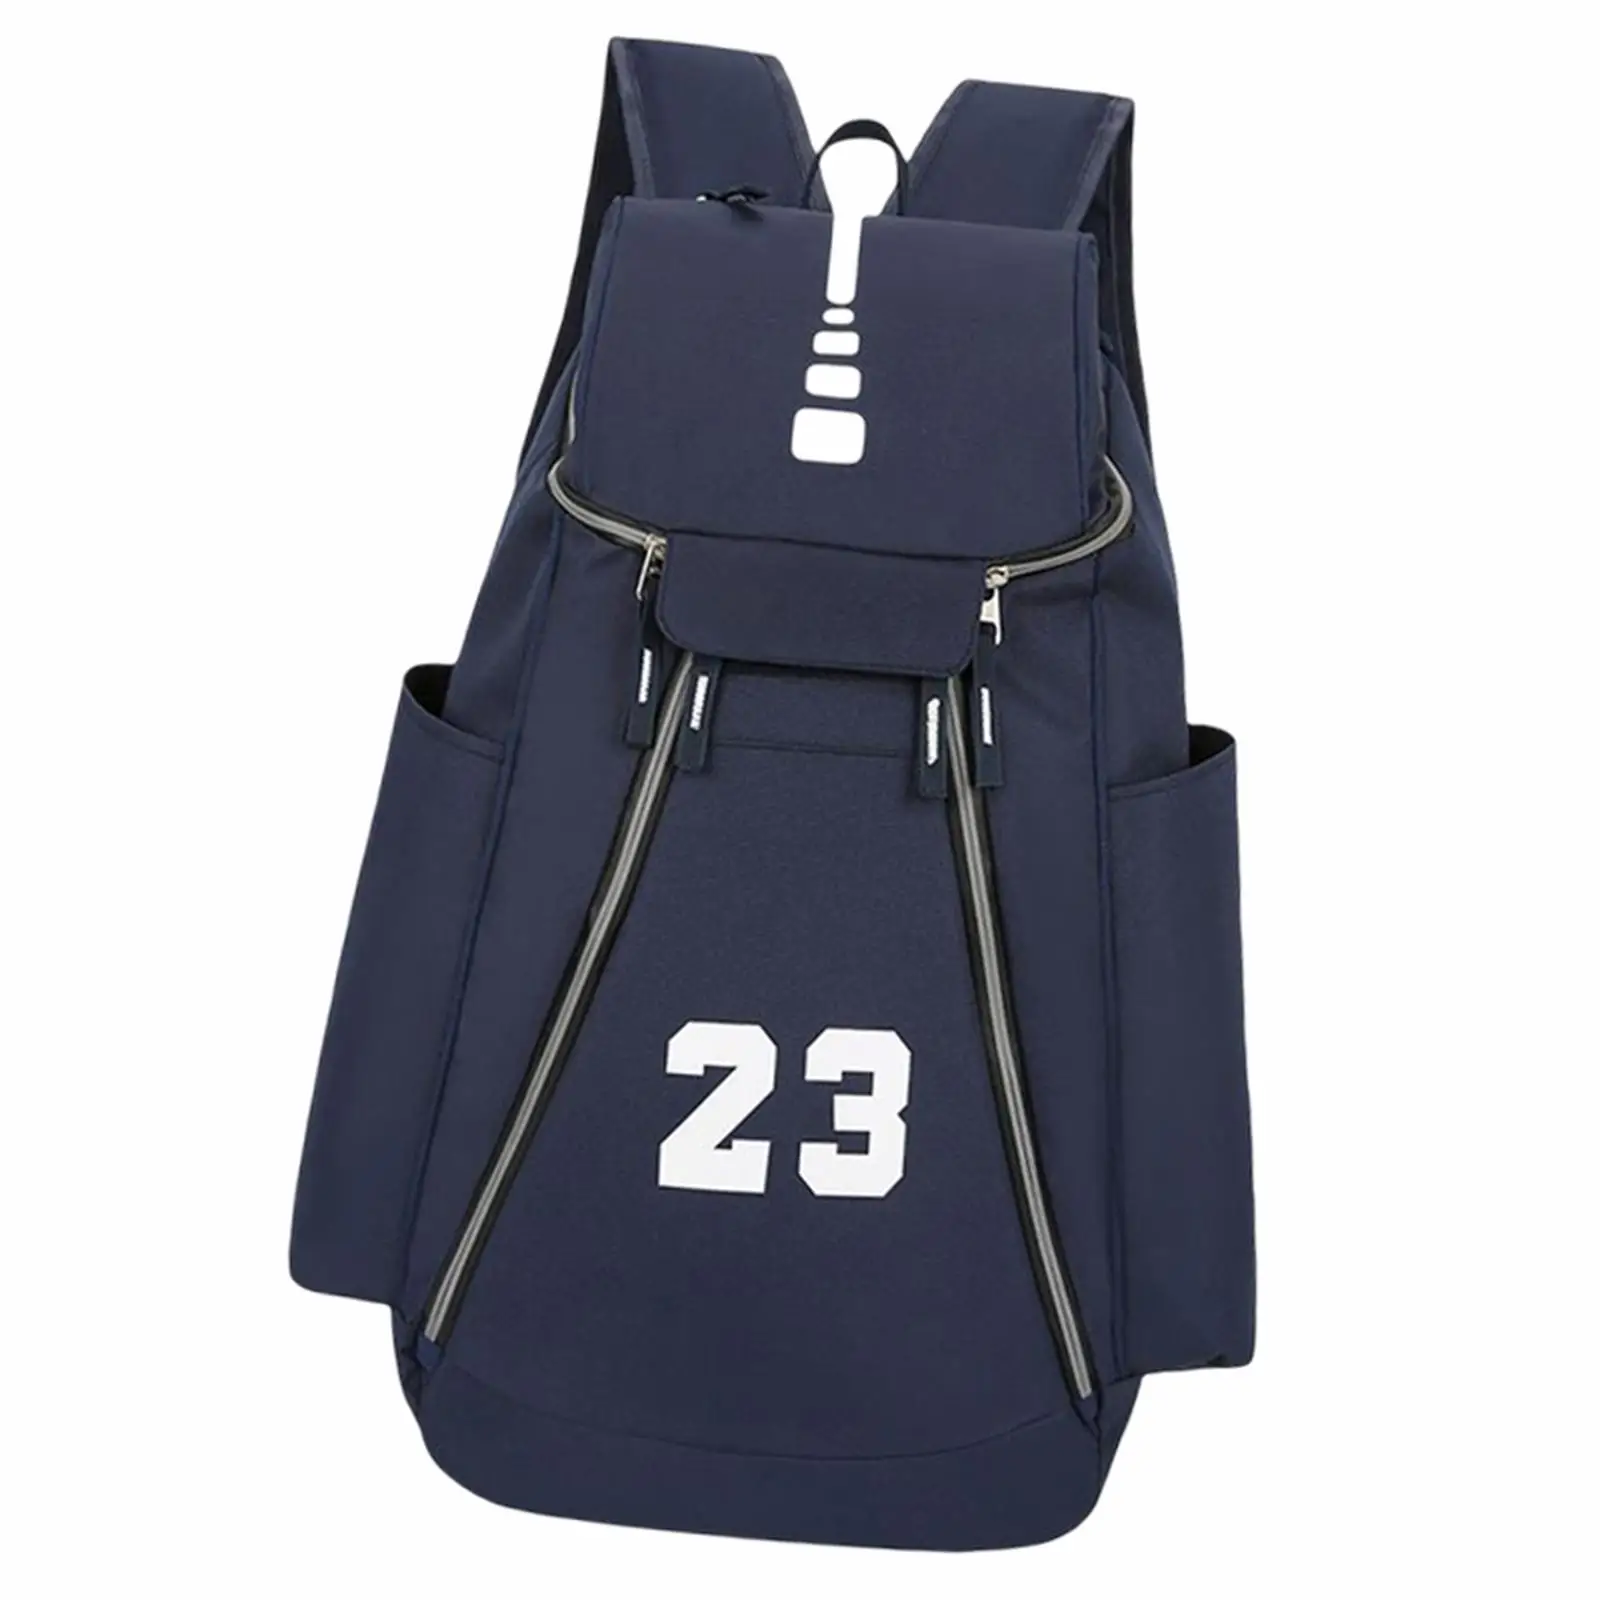 Basketball Backpack Hiking Bag Daypack Sport Backpack sports Shoulder Bag for Yoga Camping Traveling Swimming Volleyball